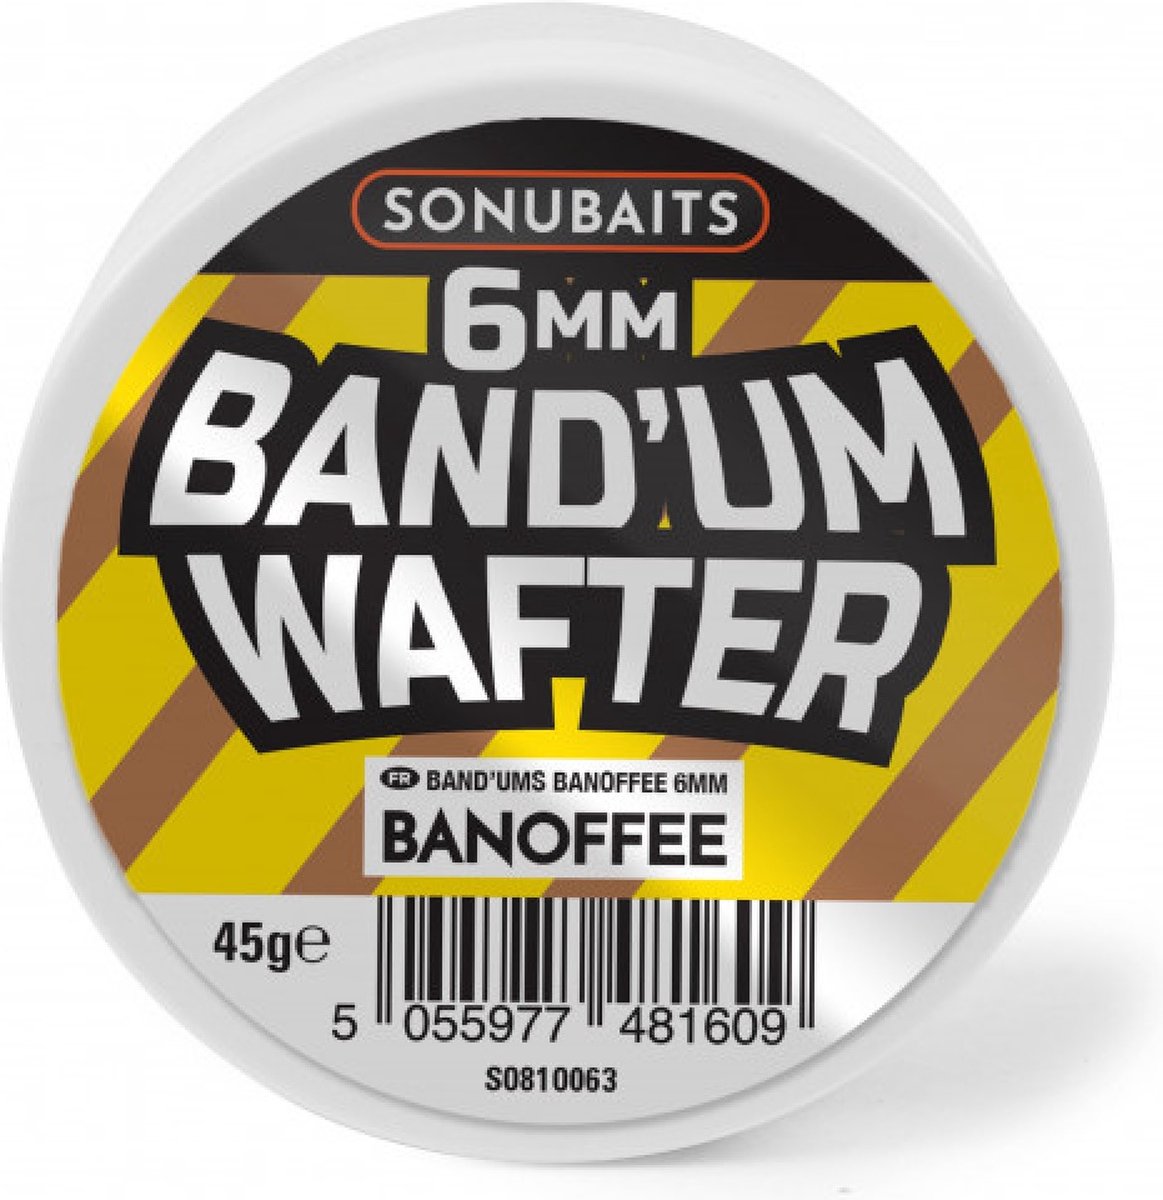 Sonubaits Bandum Wafter Krill &Squid 6mm | Wafters & Dumbells